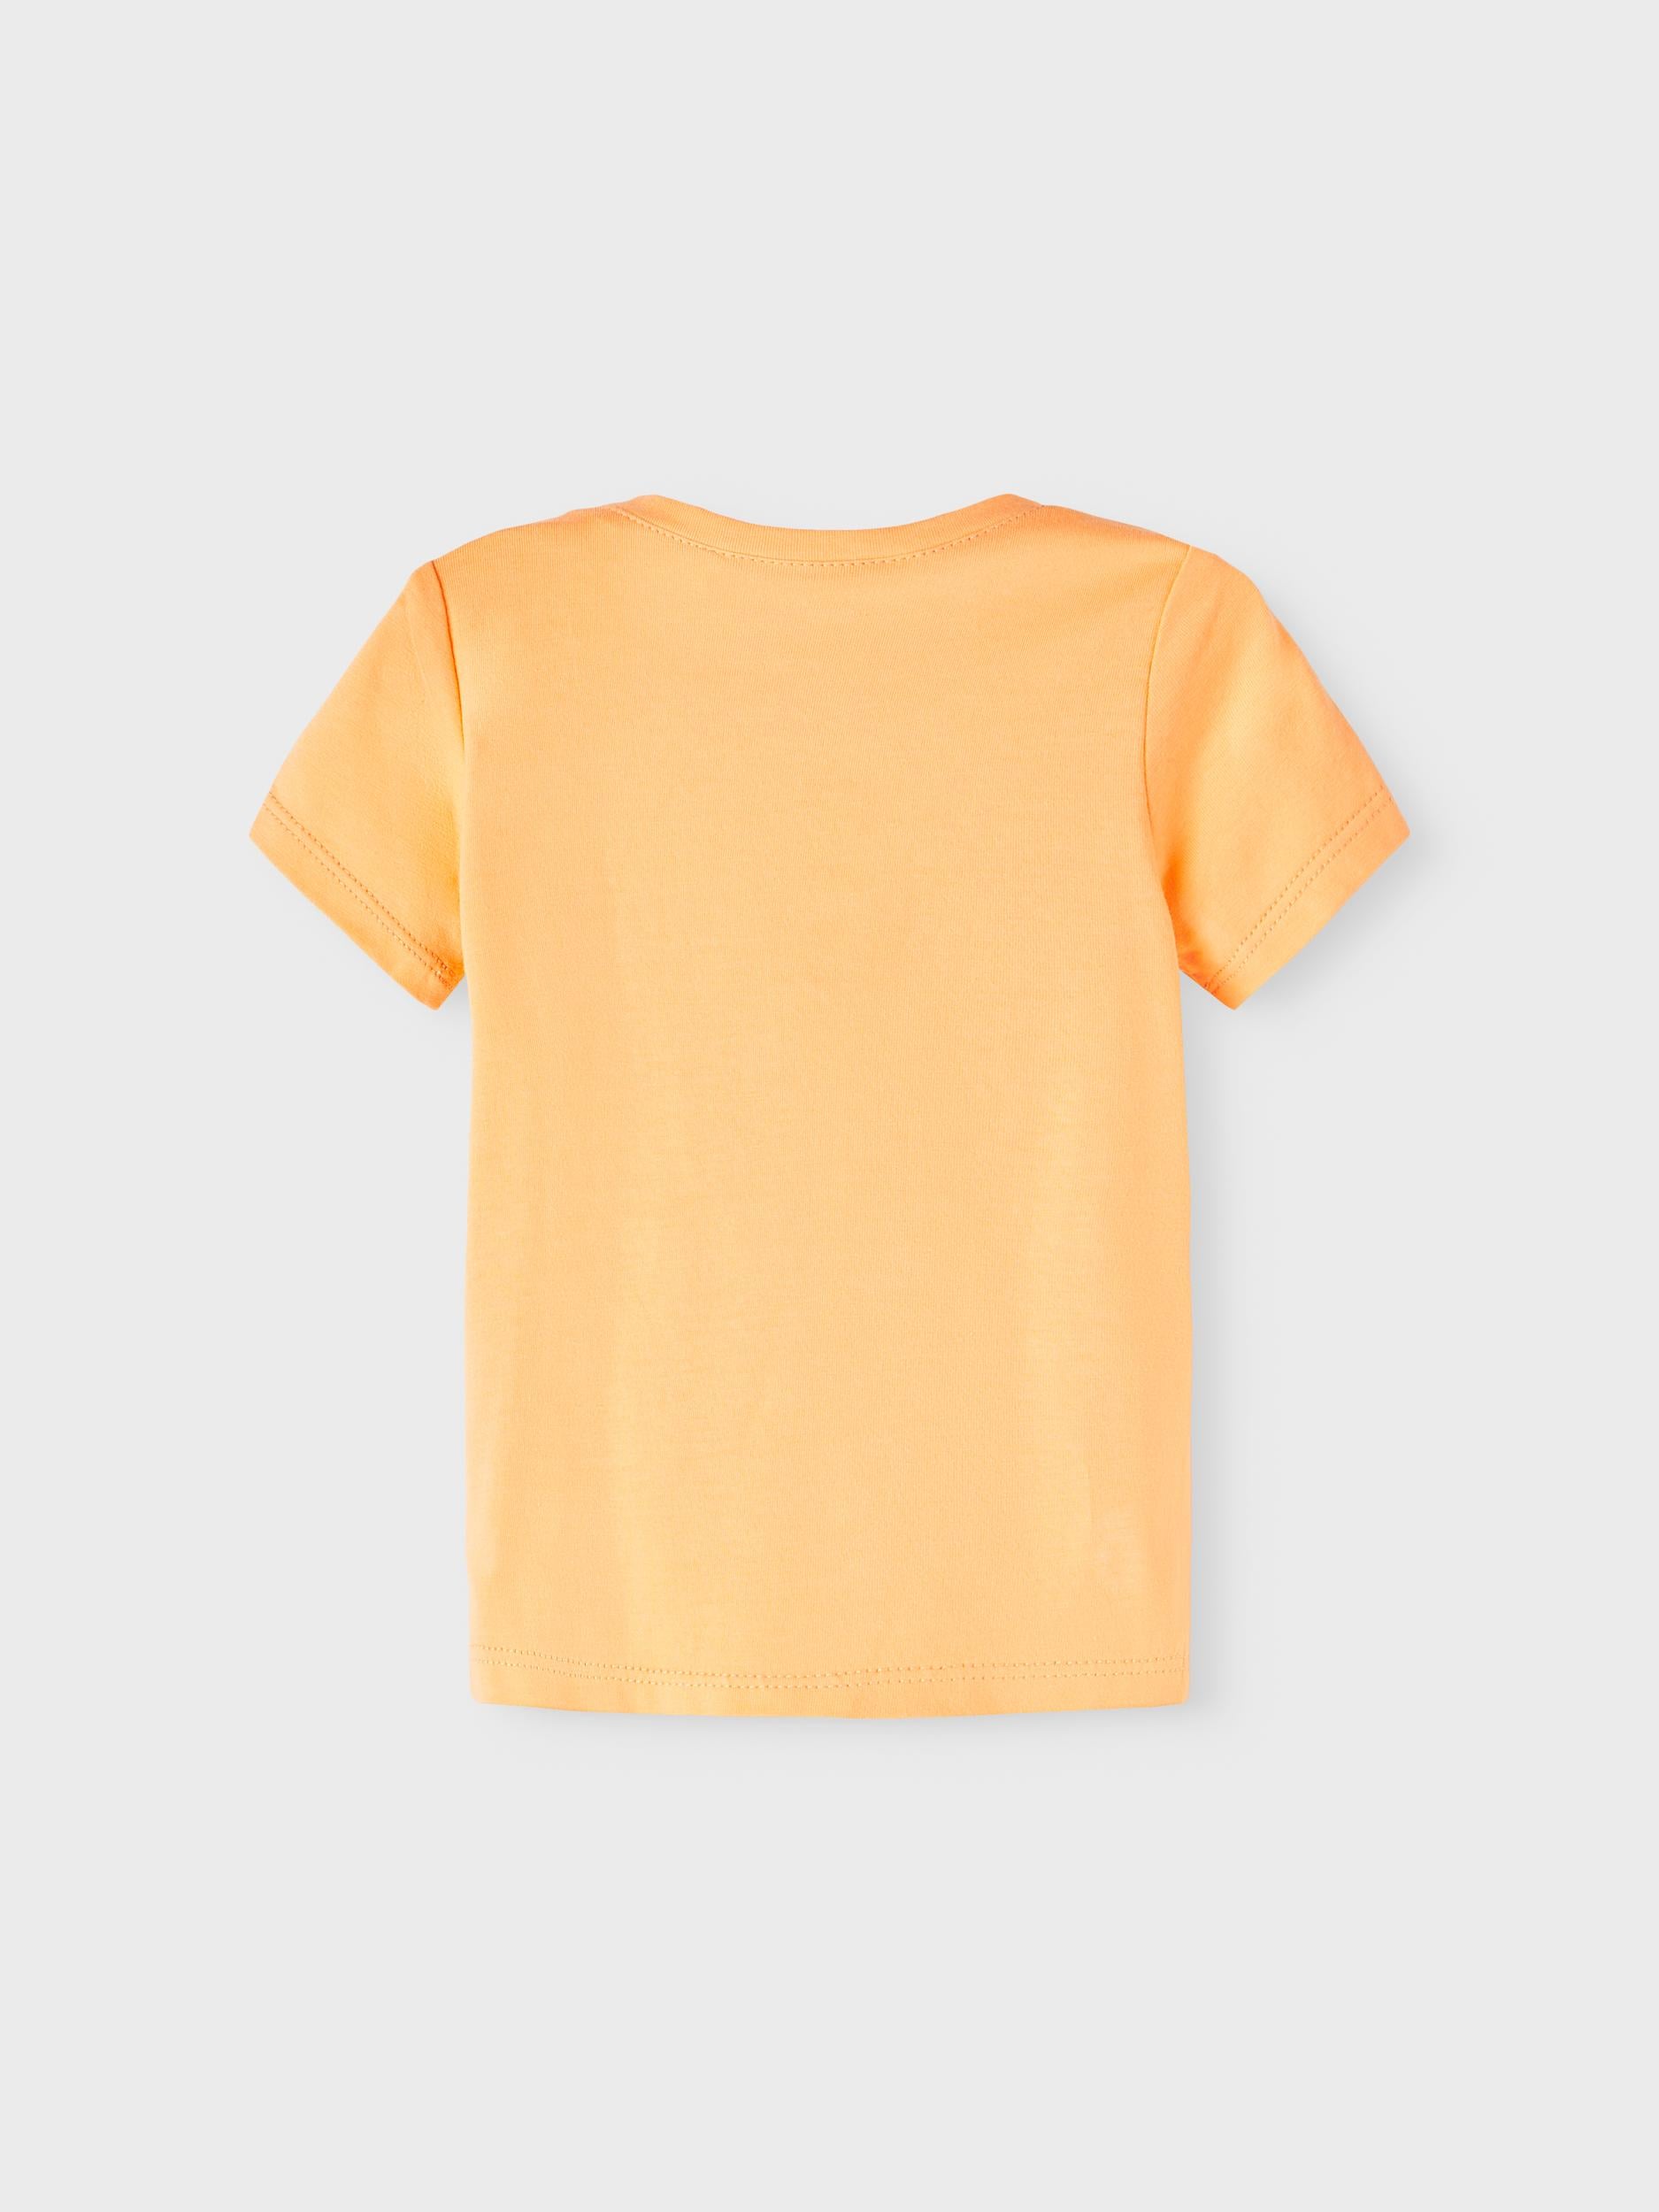 Boy's Orange Hude Short Sleeve Top-Back View